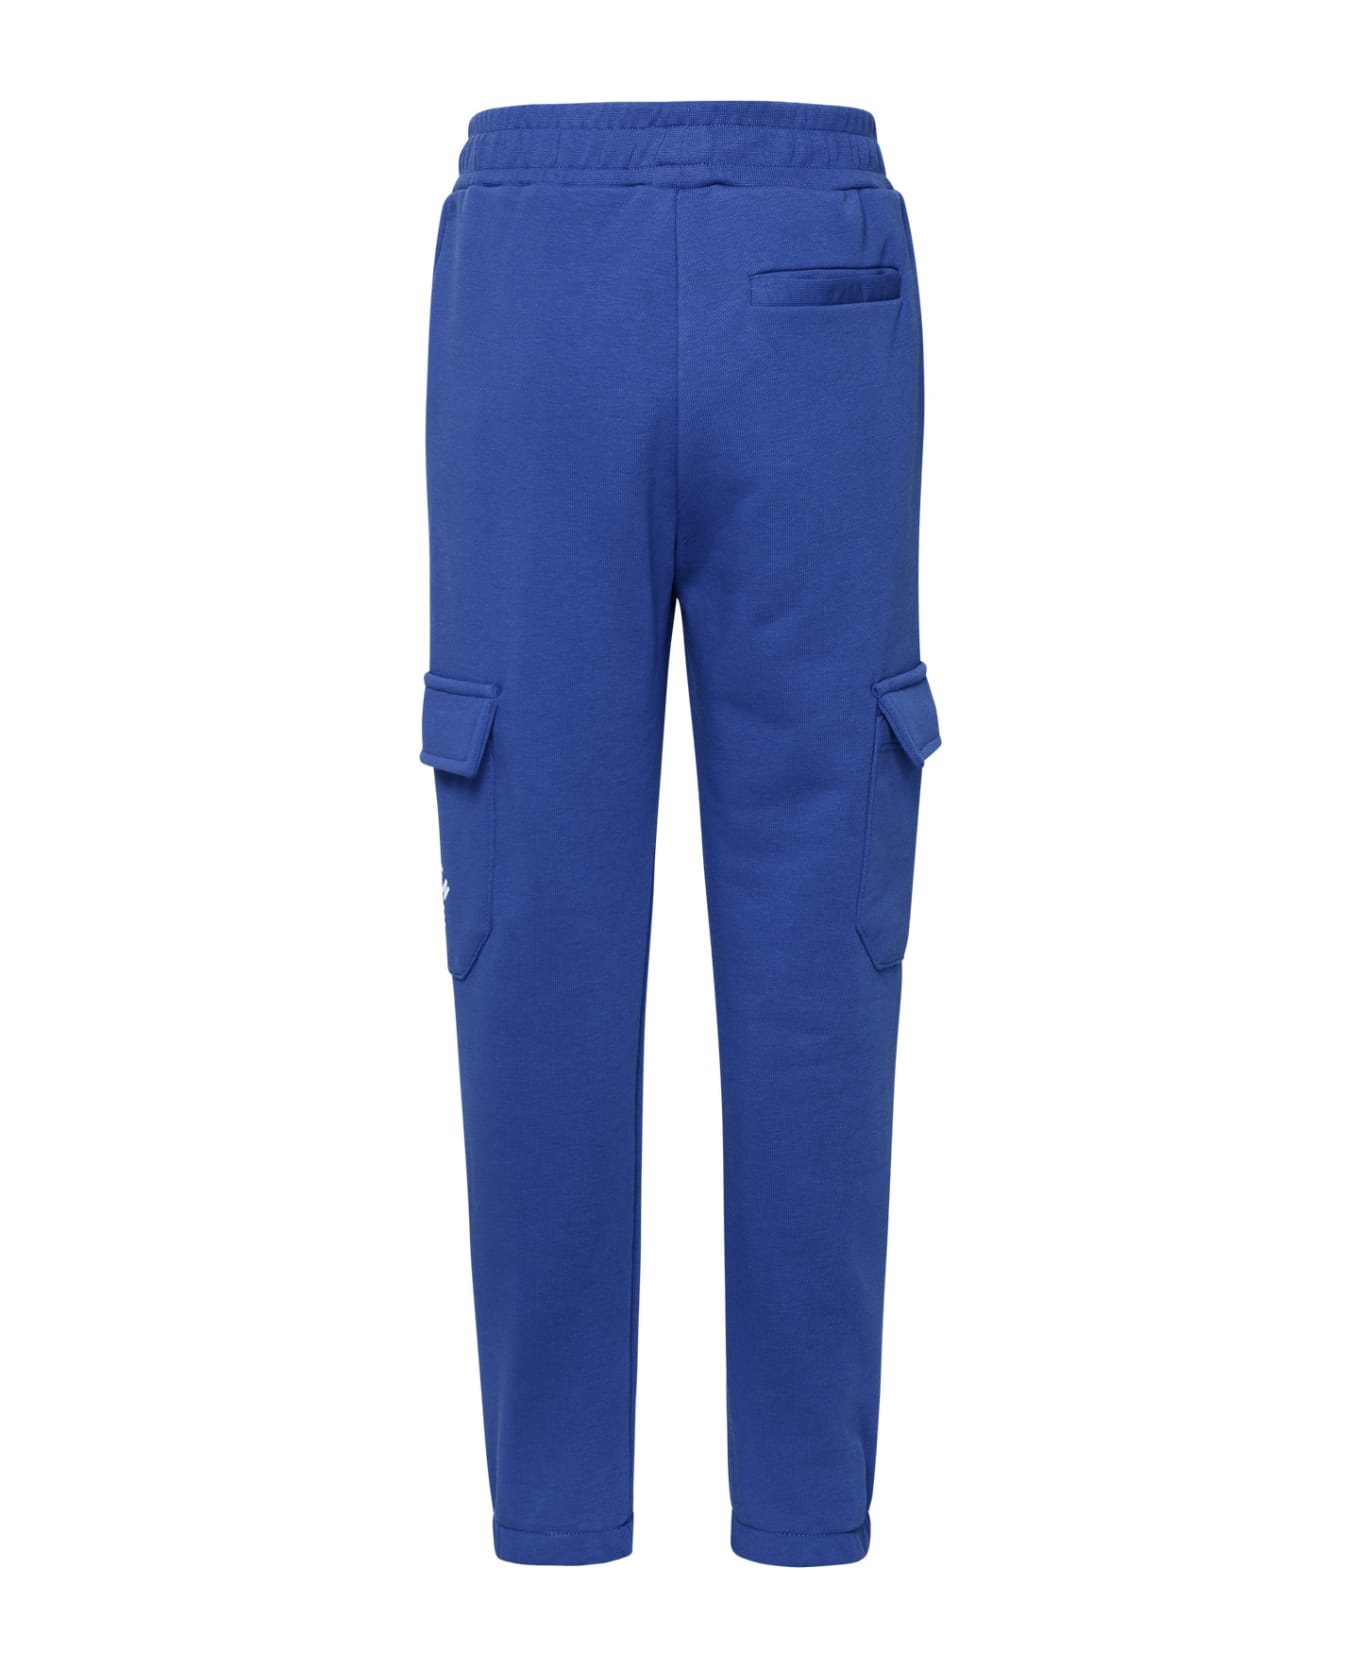 Golden Goose Blue Cotton Pants - Blue ボトムス